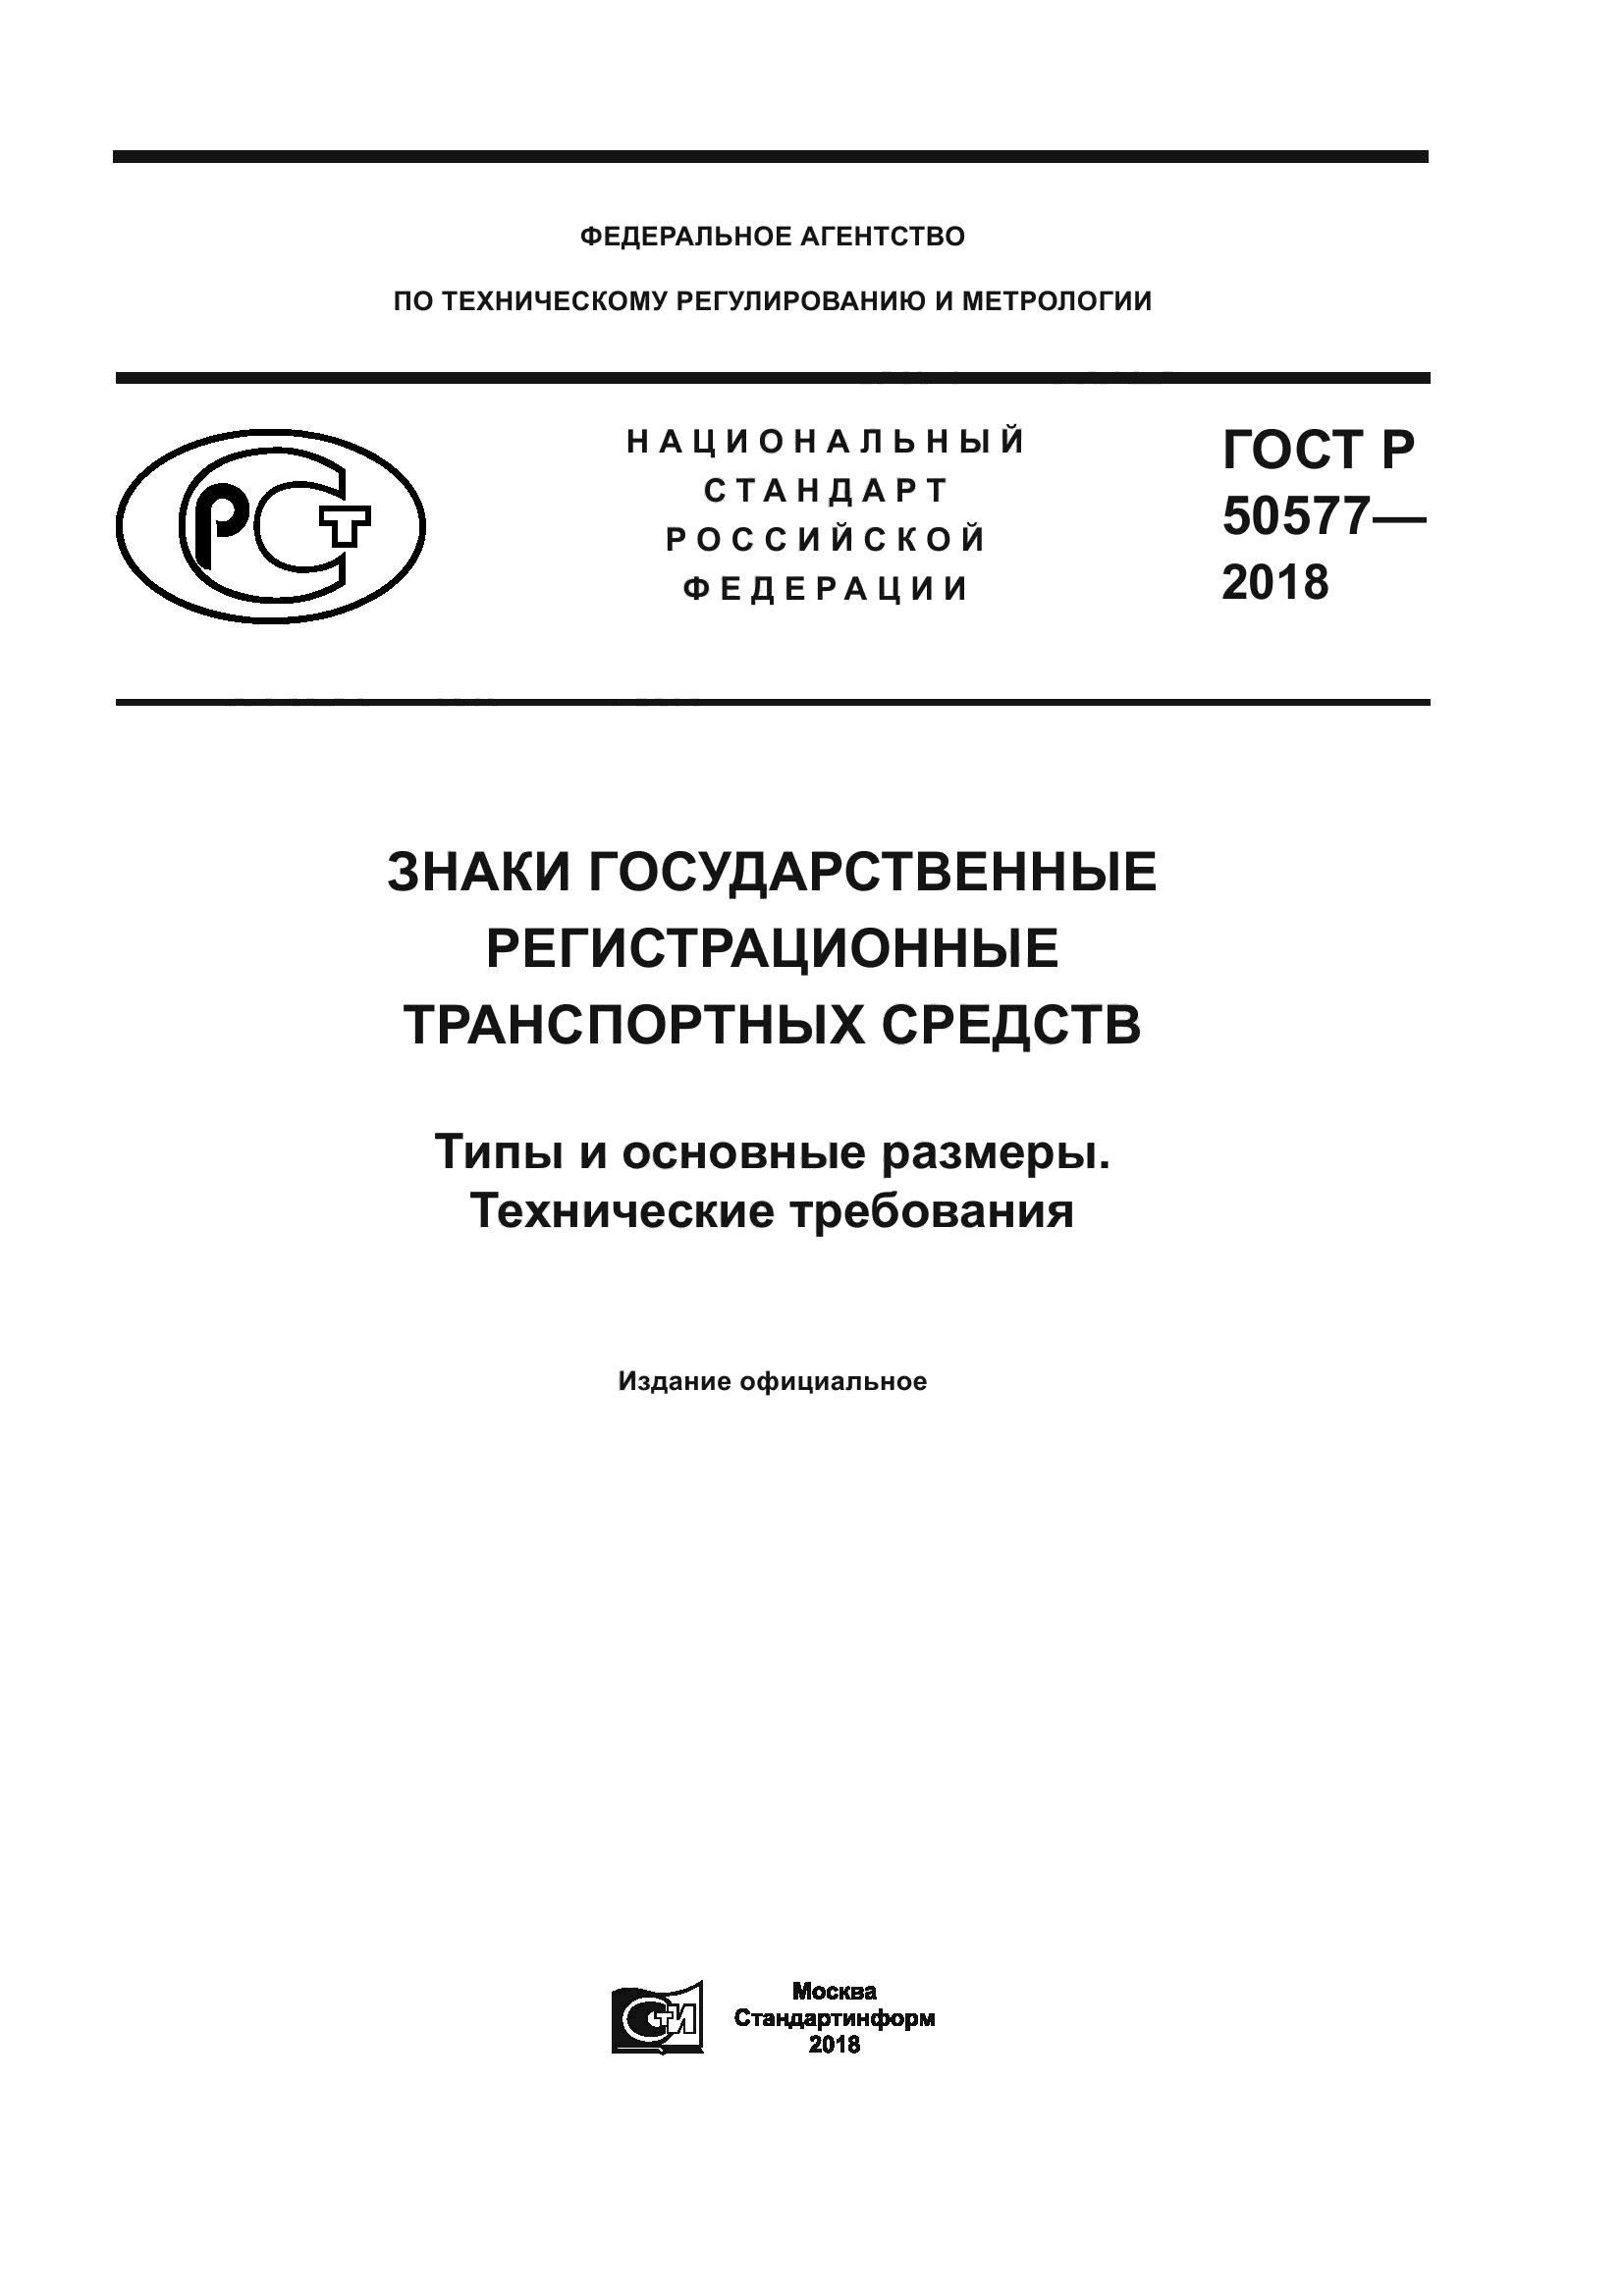 ГОСТ Р 50577-2018